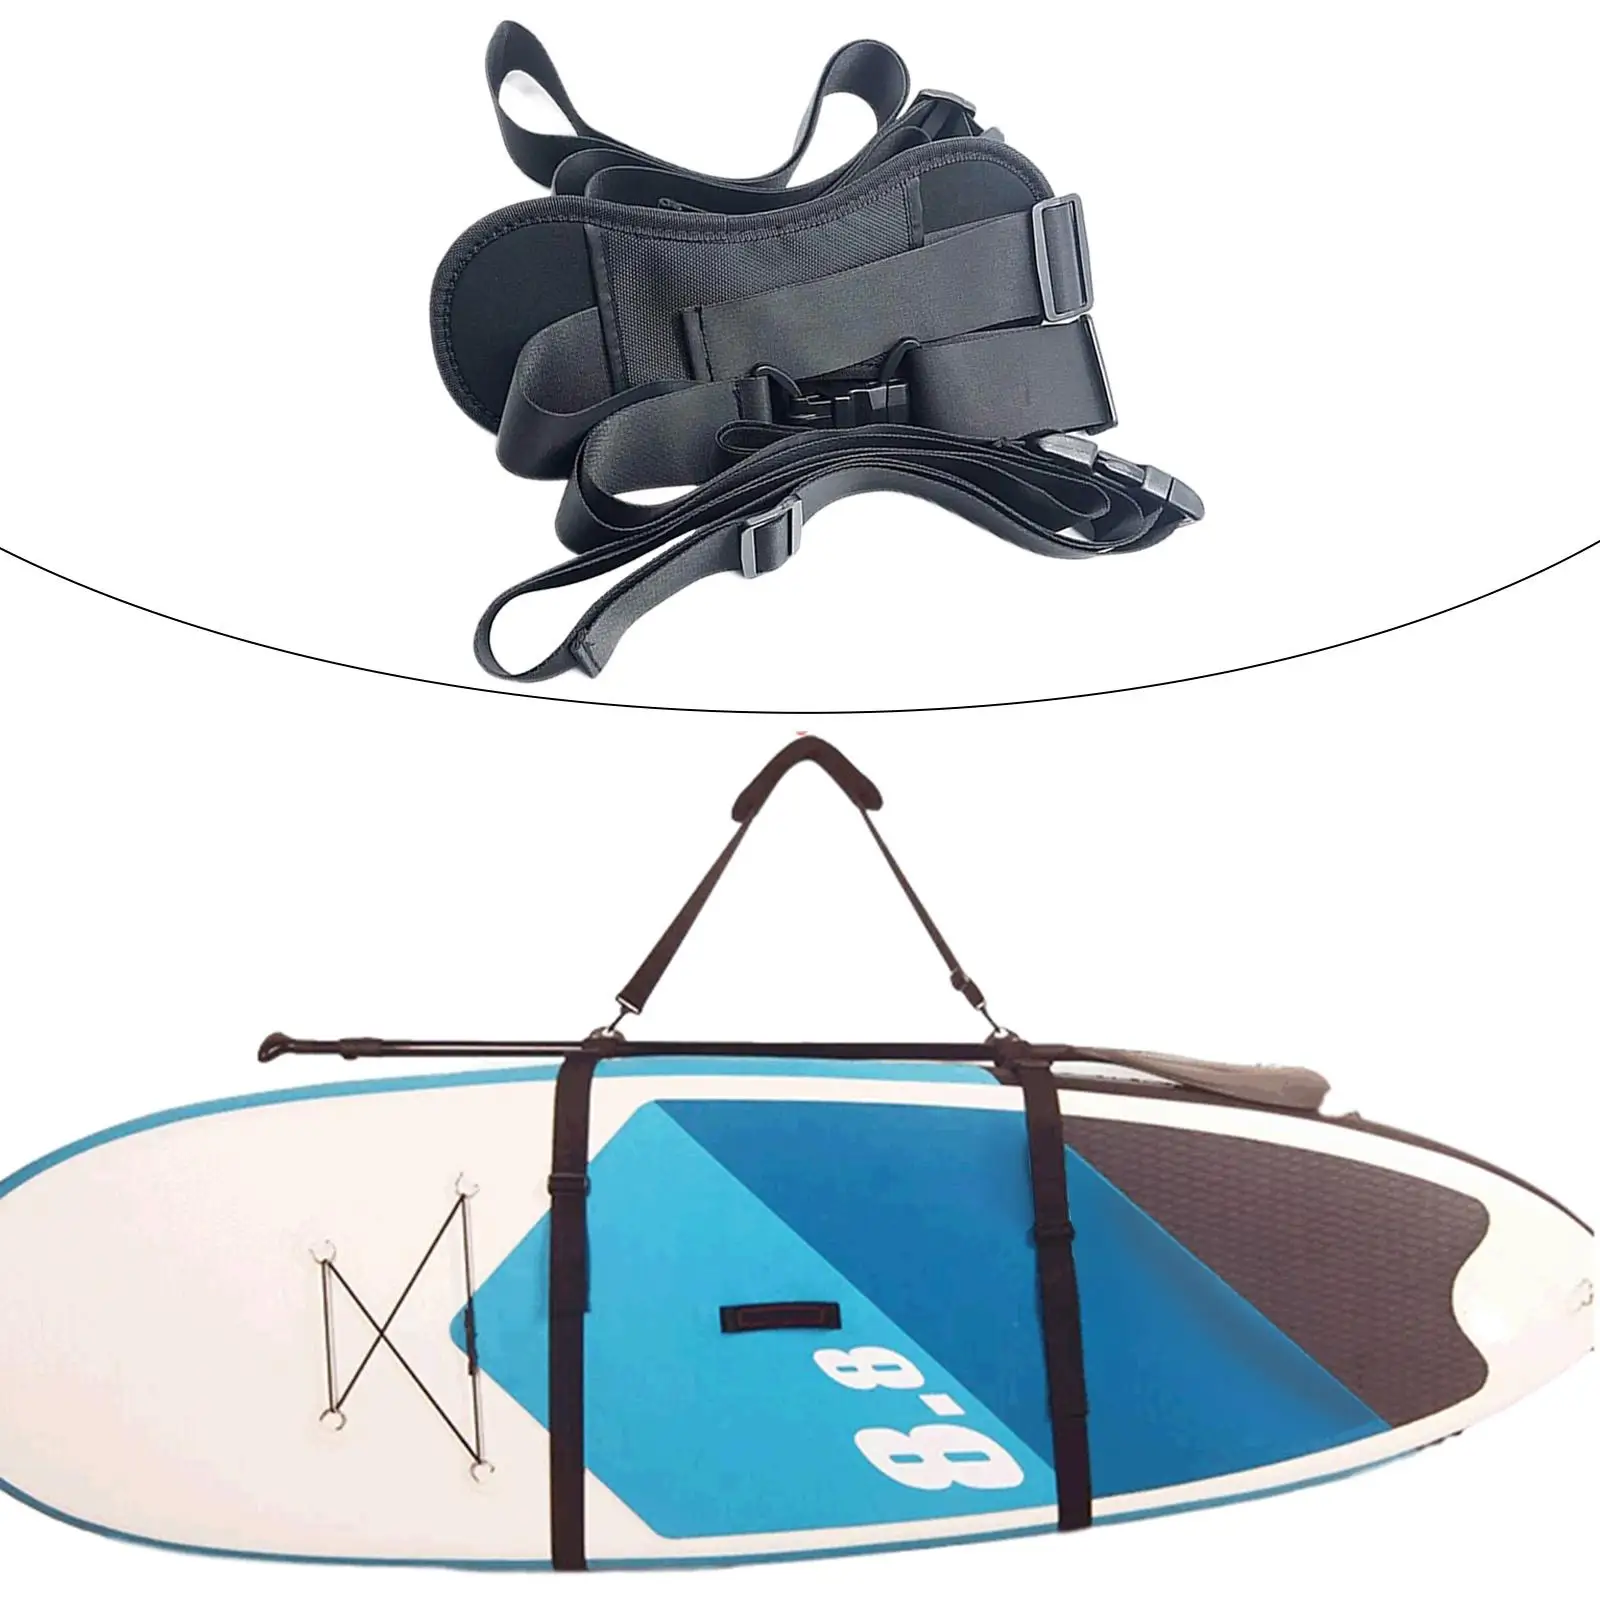 Universal Surfboard Carry Straps Shoulder Strap Durable Paddleboard Comfort Adjustable for Tourism Beach Kayak Fishing Women